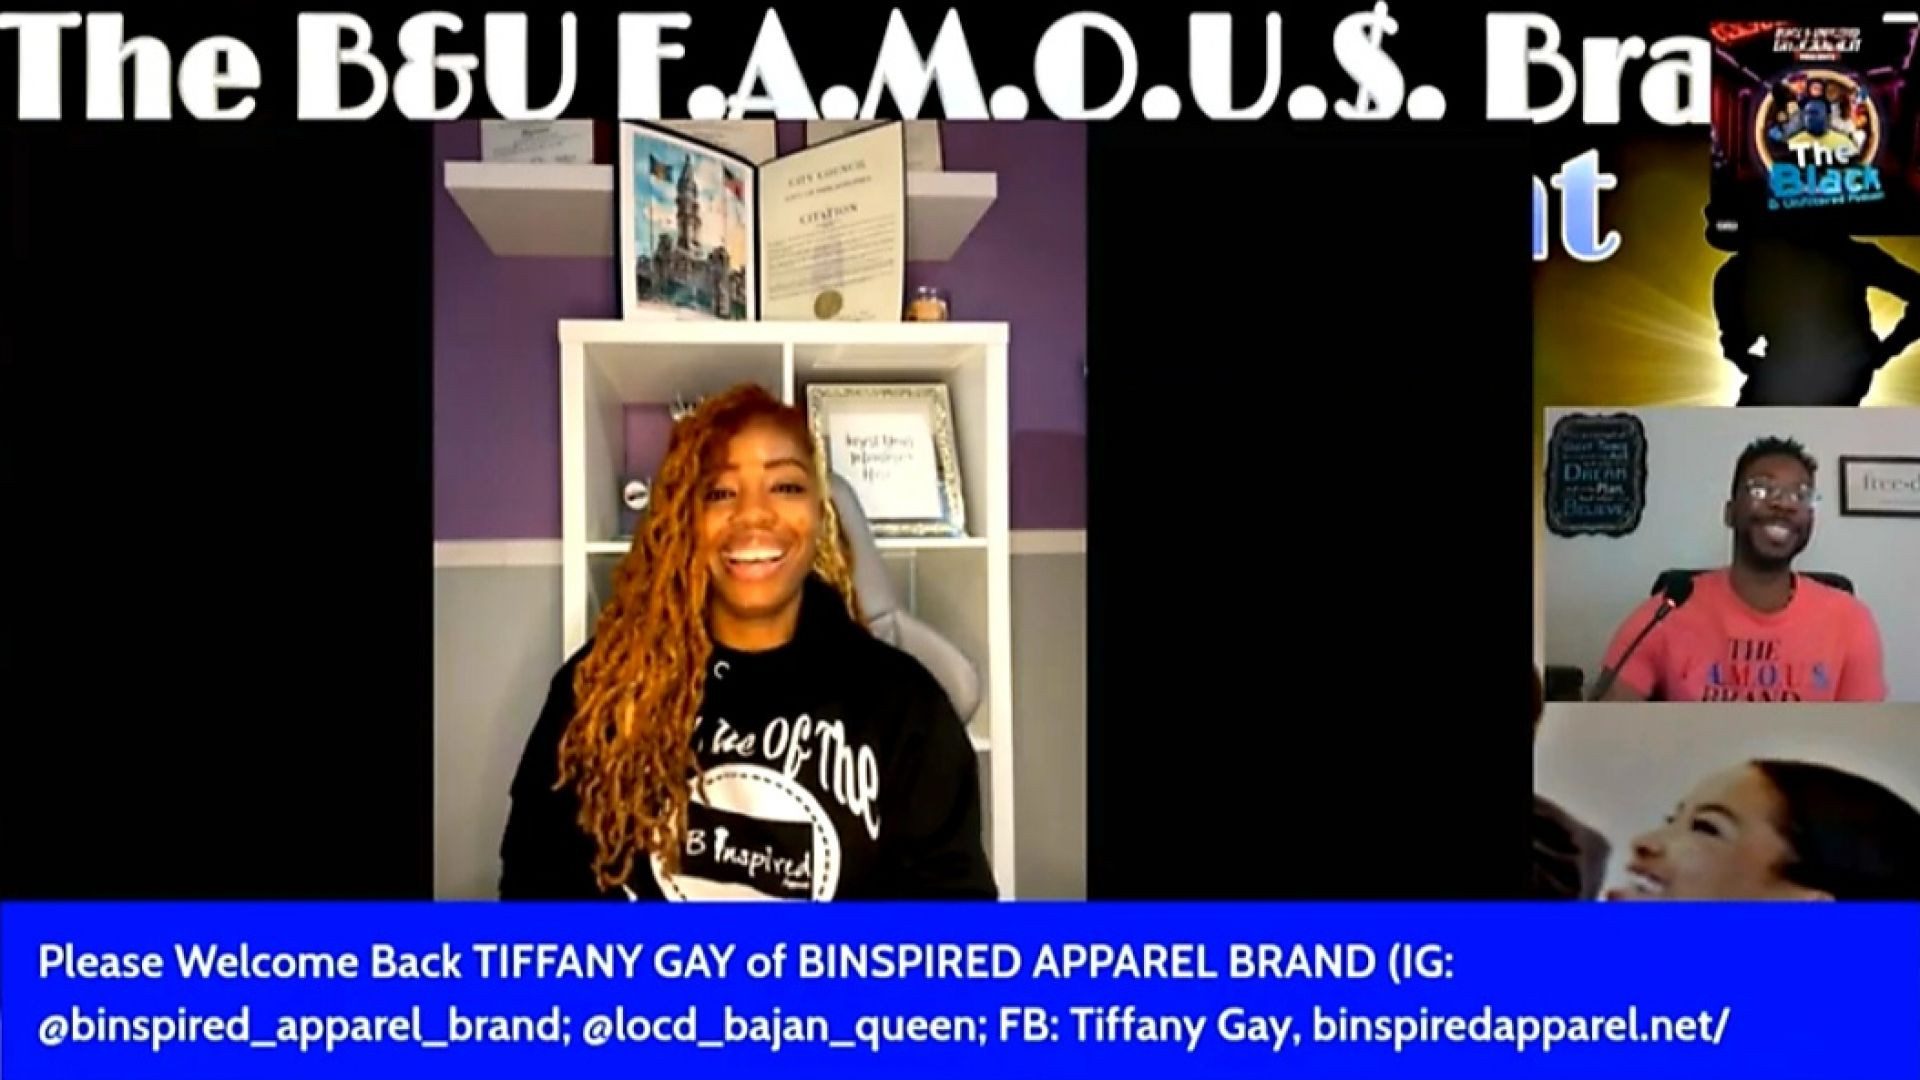 S2 EP 3. The B&U FAMOU$ Brand Business Spotlight feat. Tiffany Gay of BInspired Apparel Brand